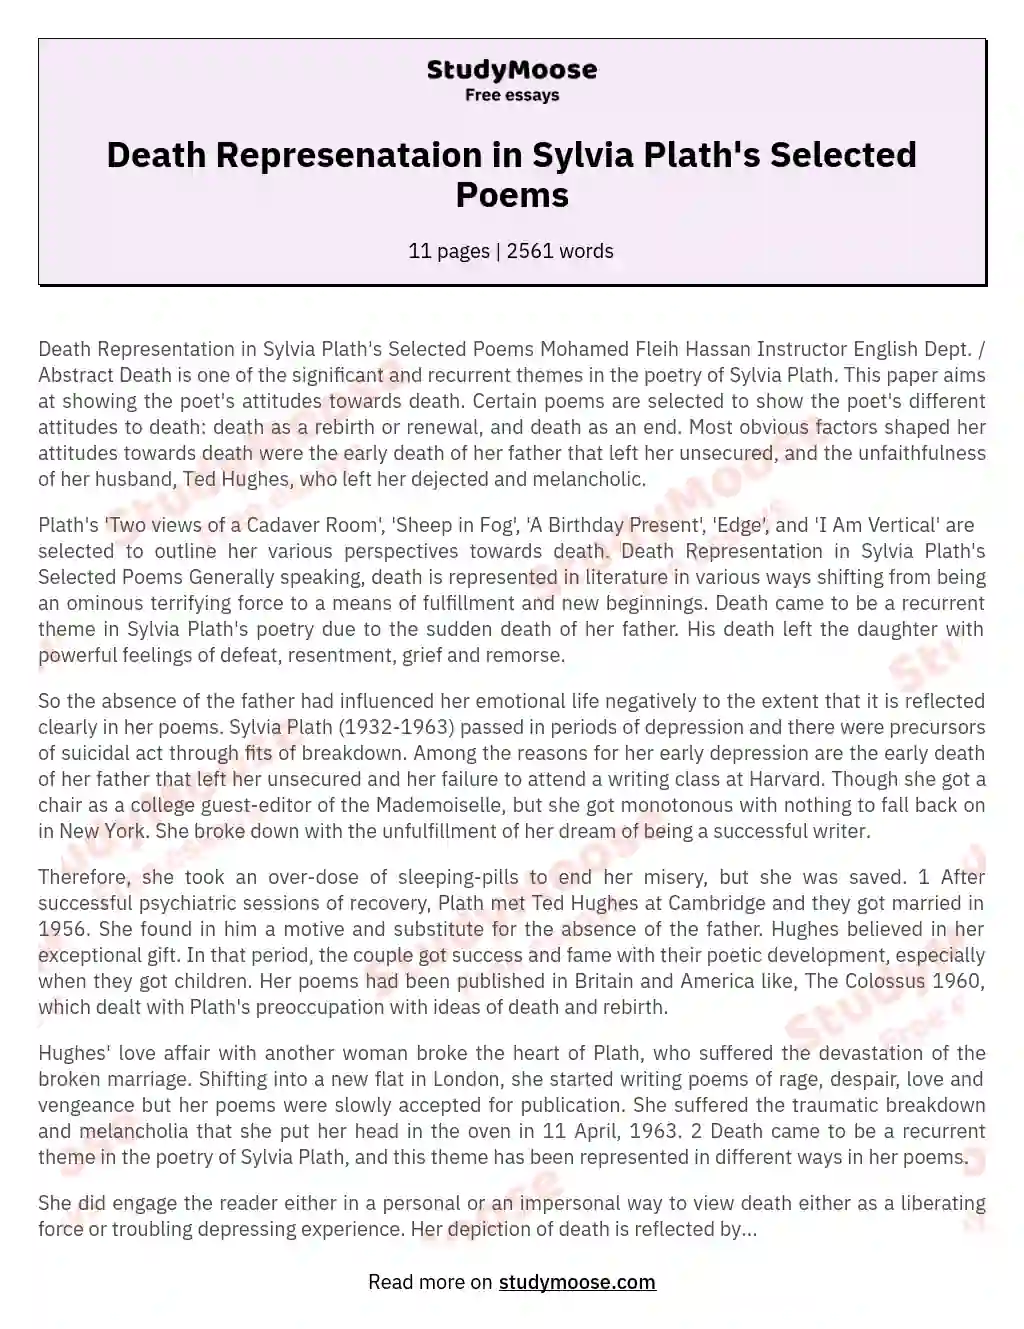 Death Represenataion in Sylvia Plath's Selected Poems